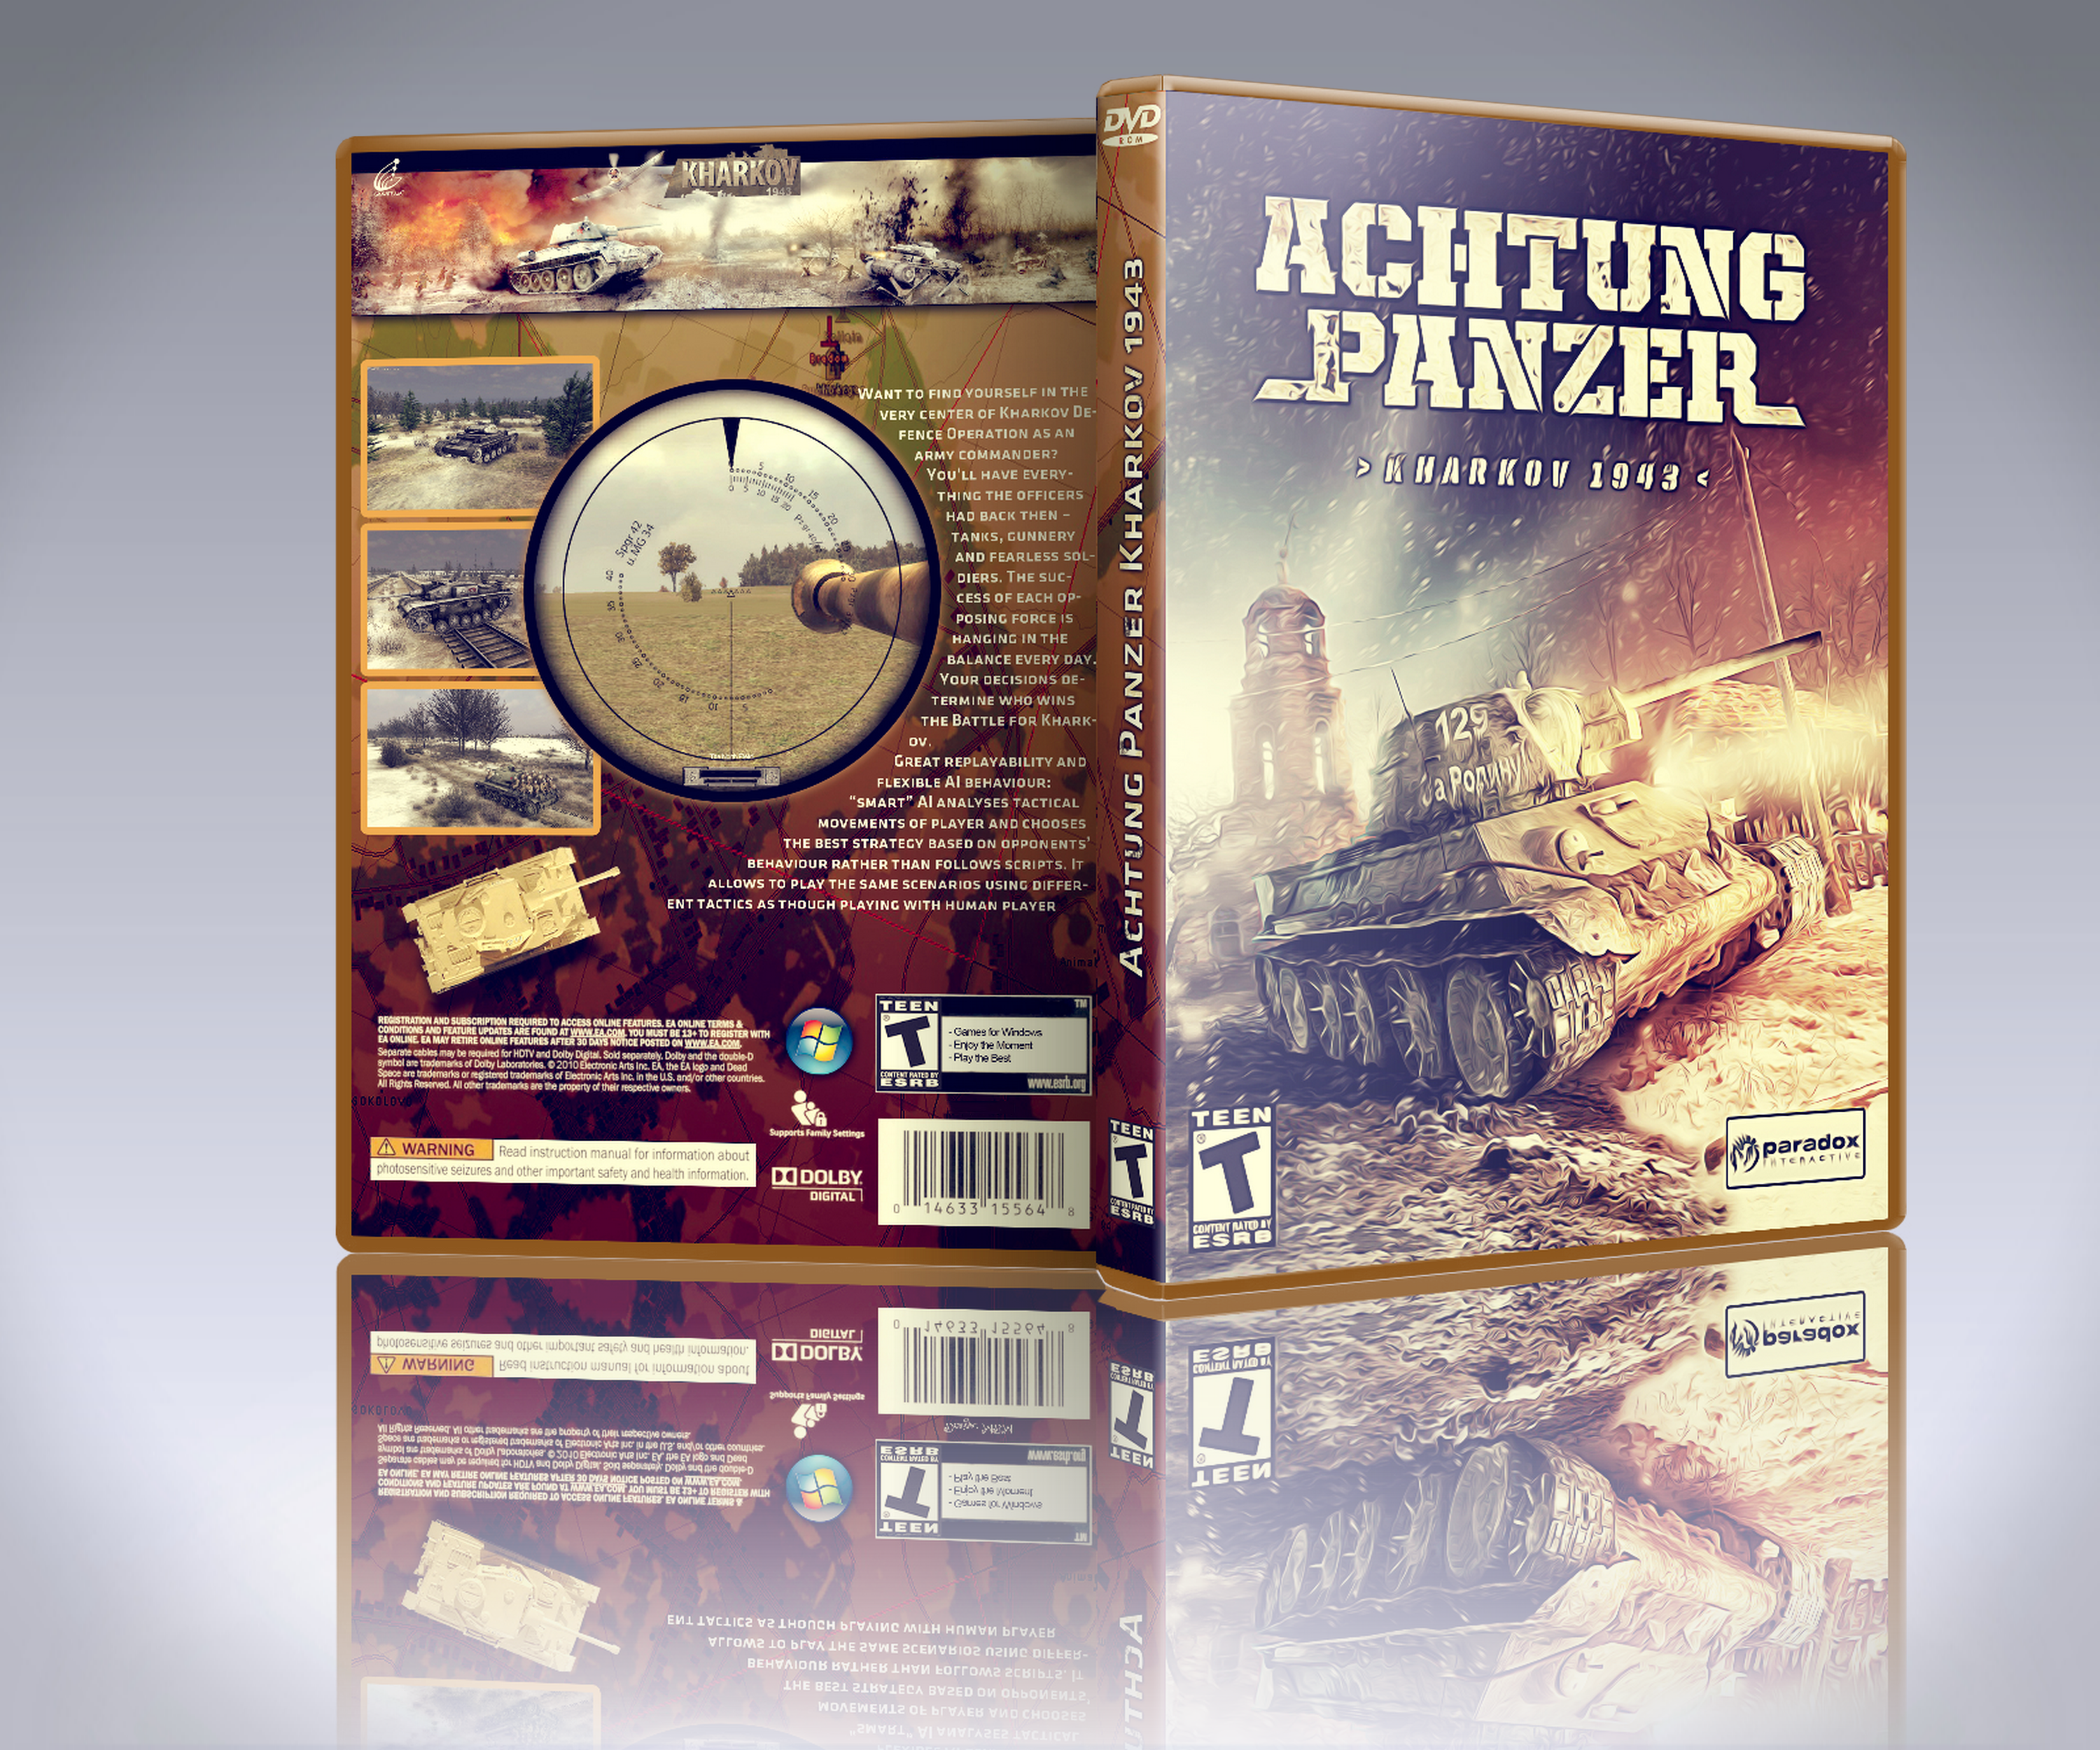 Achtung Panzer Kharkov 1943 box cover